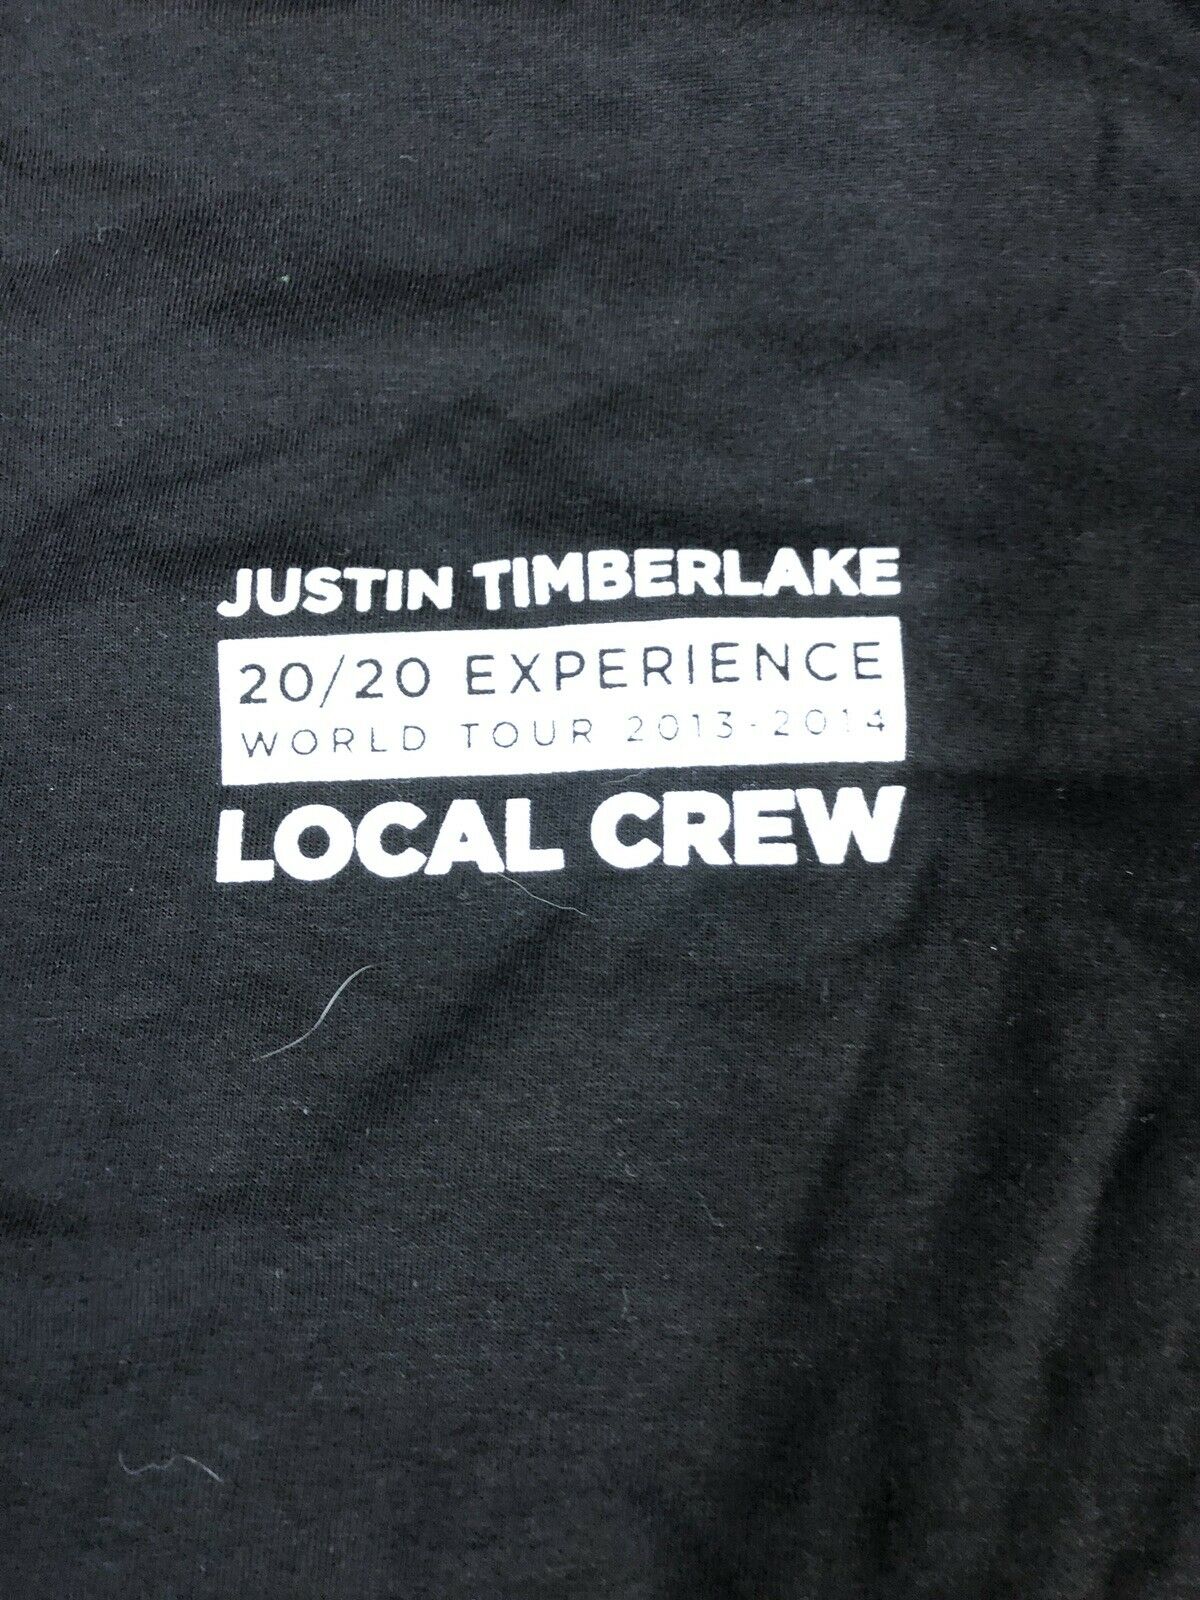 Vintage Shirt - Justin Timberlake 20/20 Experience World Tour Local Crew 2014 Xl